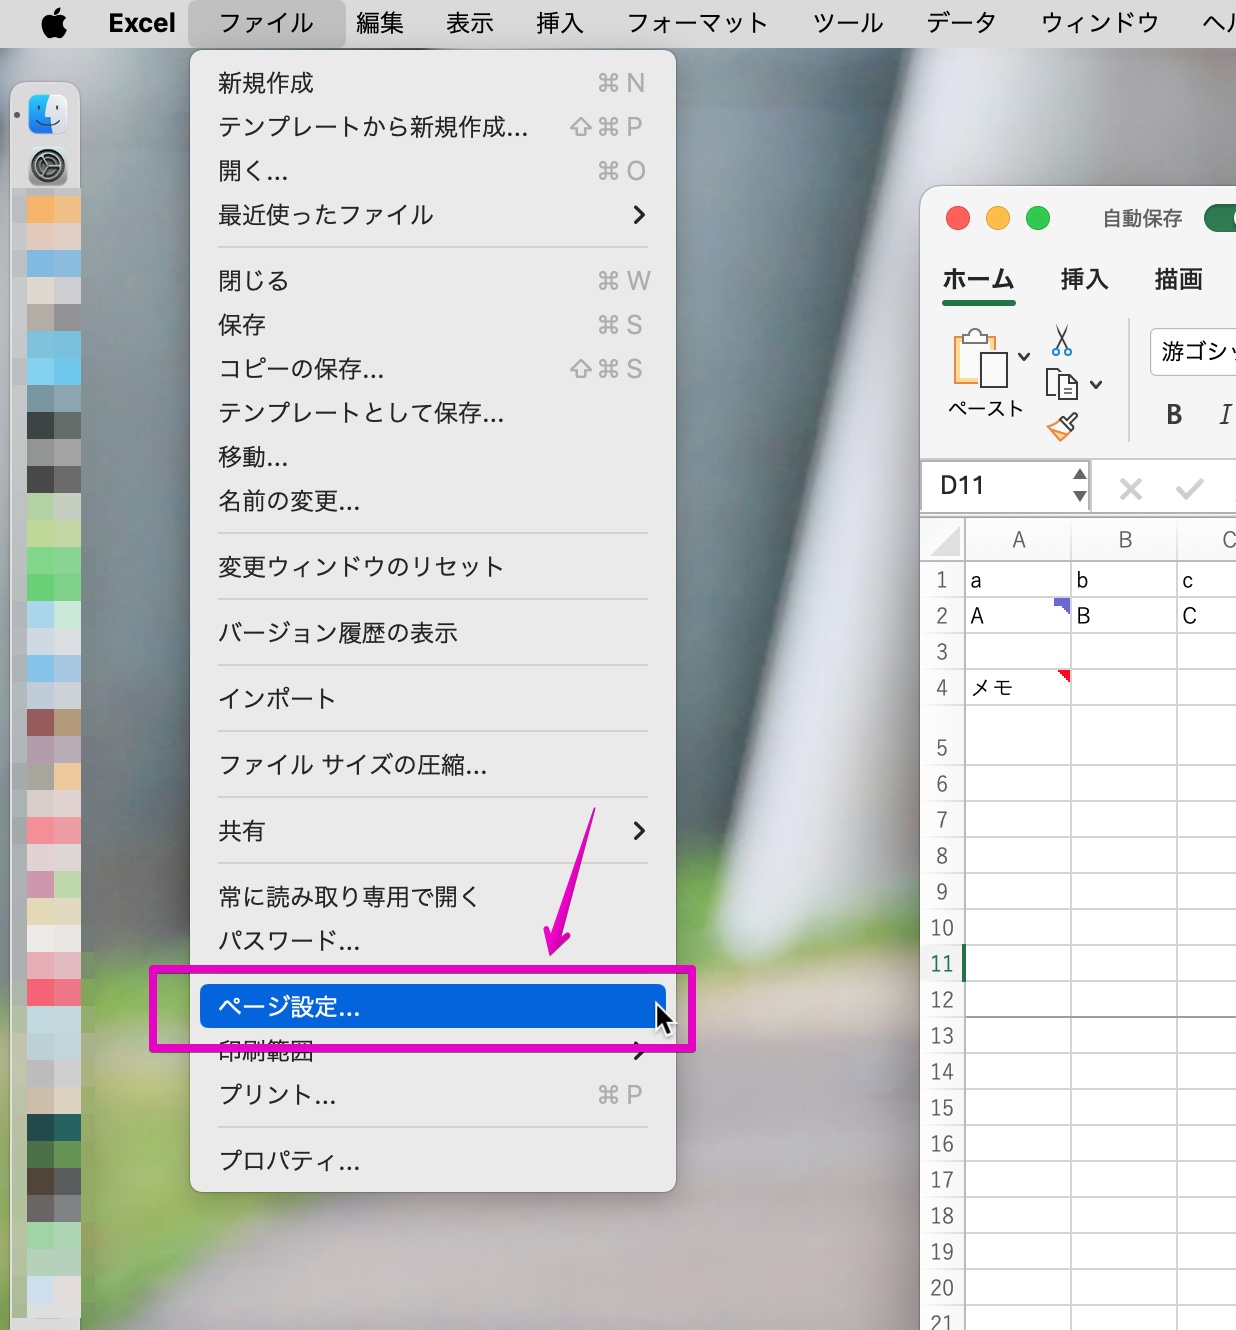 Excel Macアプリ版 コメント印刷